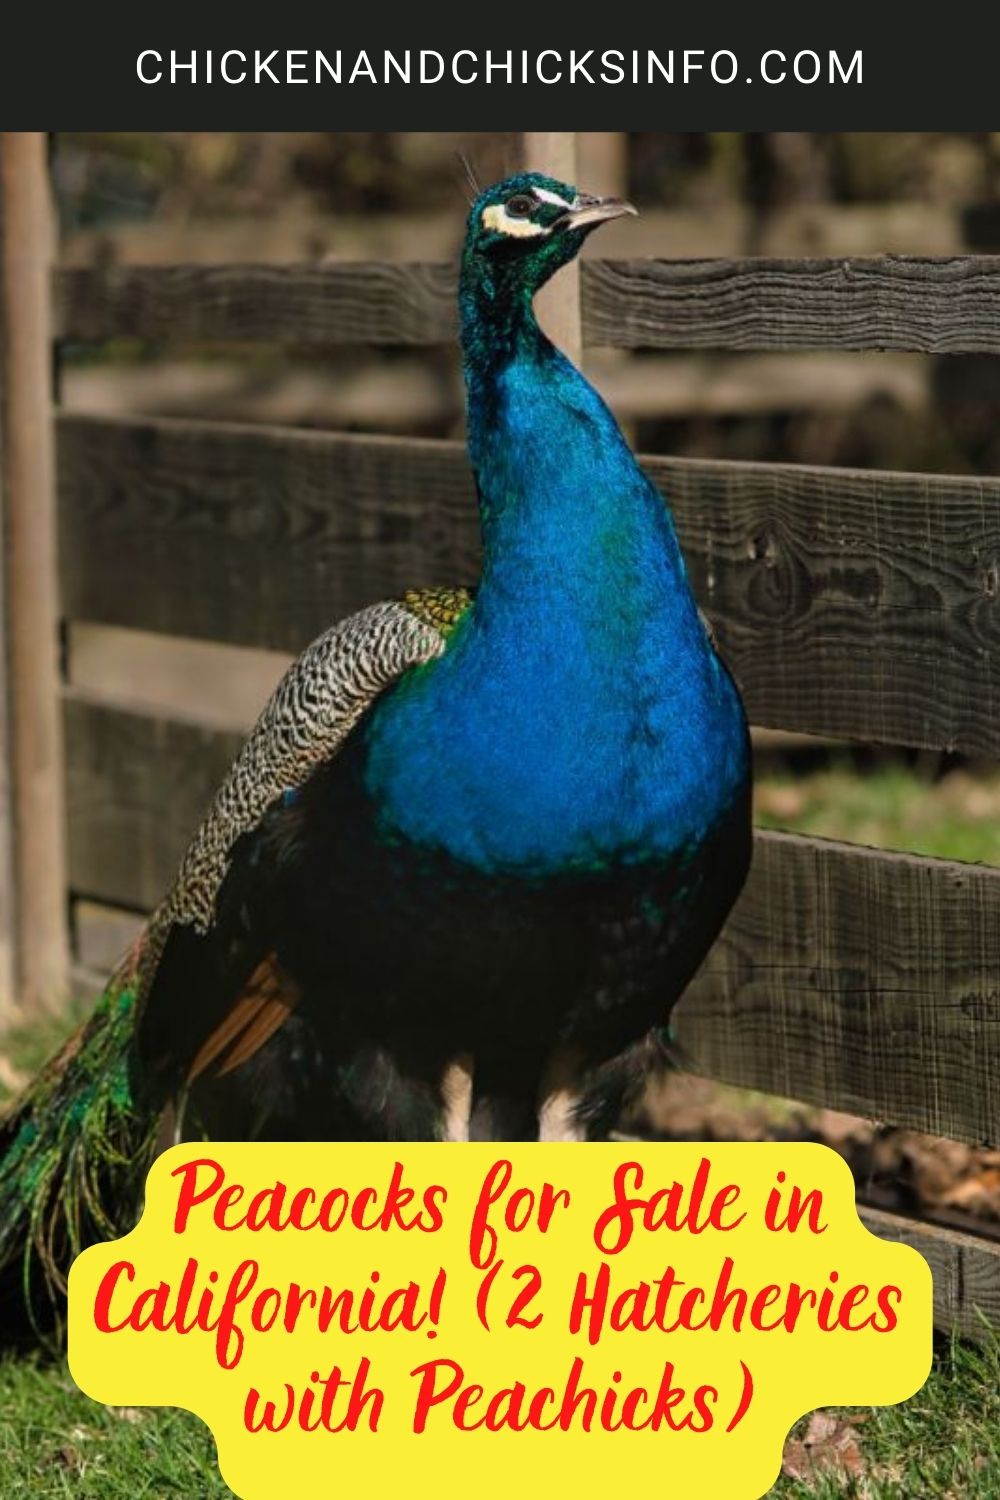 Peacocks for sale in California poster.